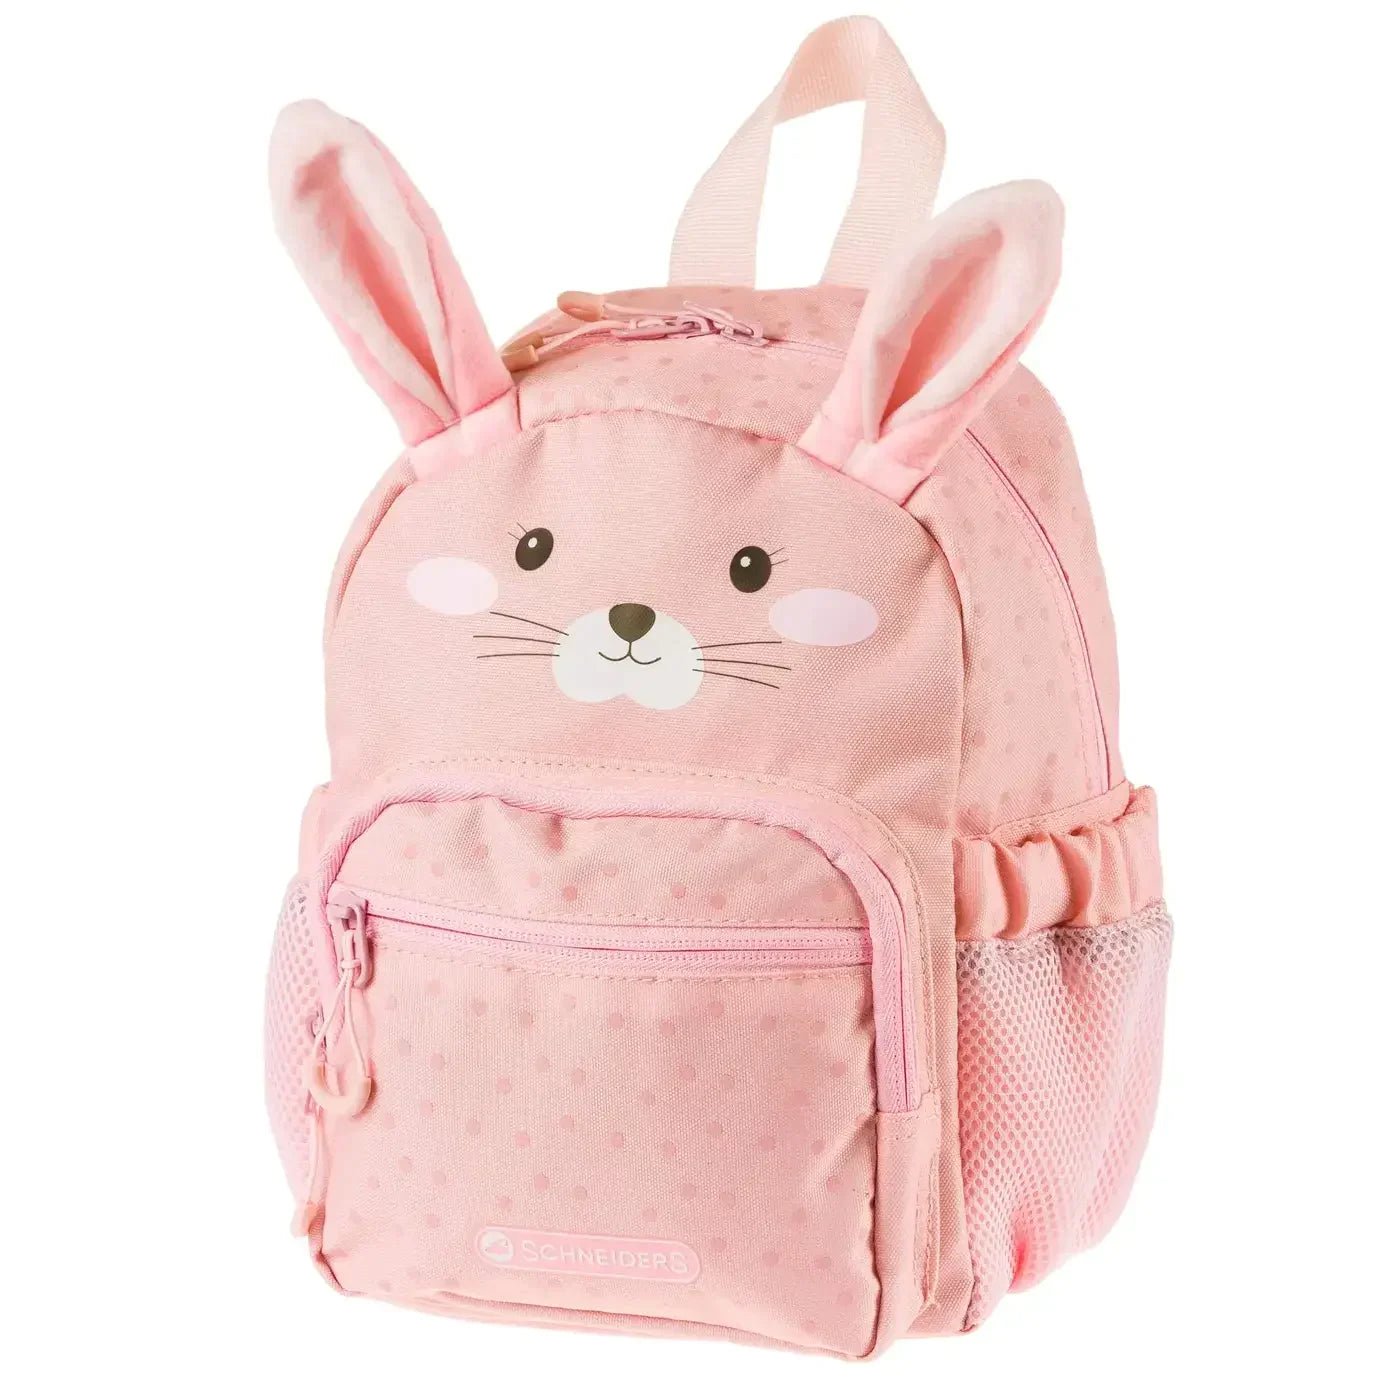 Schneiders Bags Bunny Kids backpack 27 cm - Pink